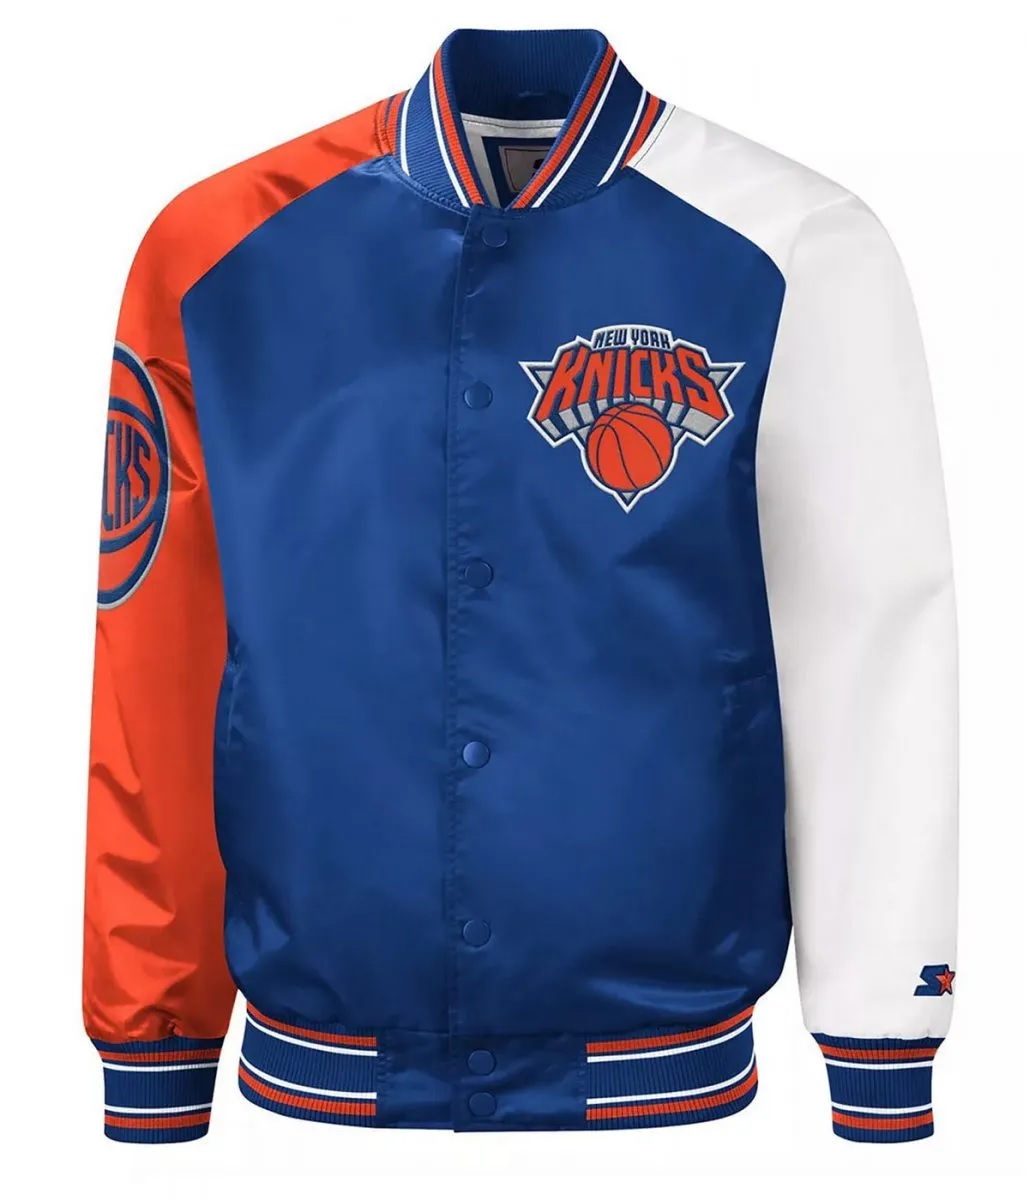 NY Knicks Reliever Raglan Royal Blue and Orange Satin Jacket